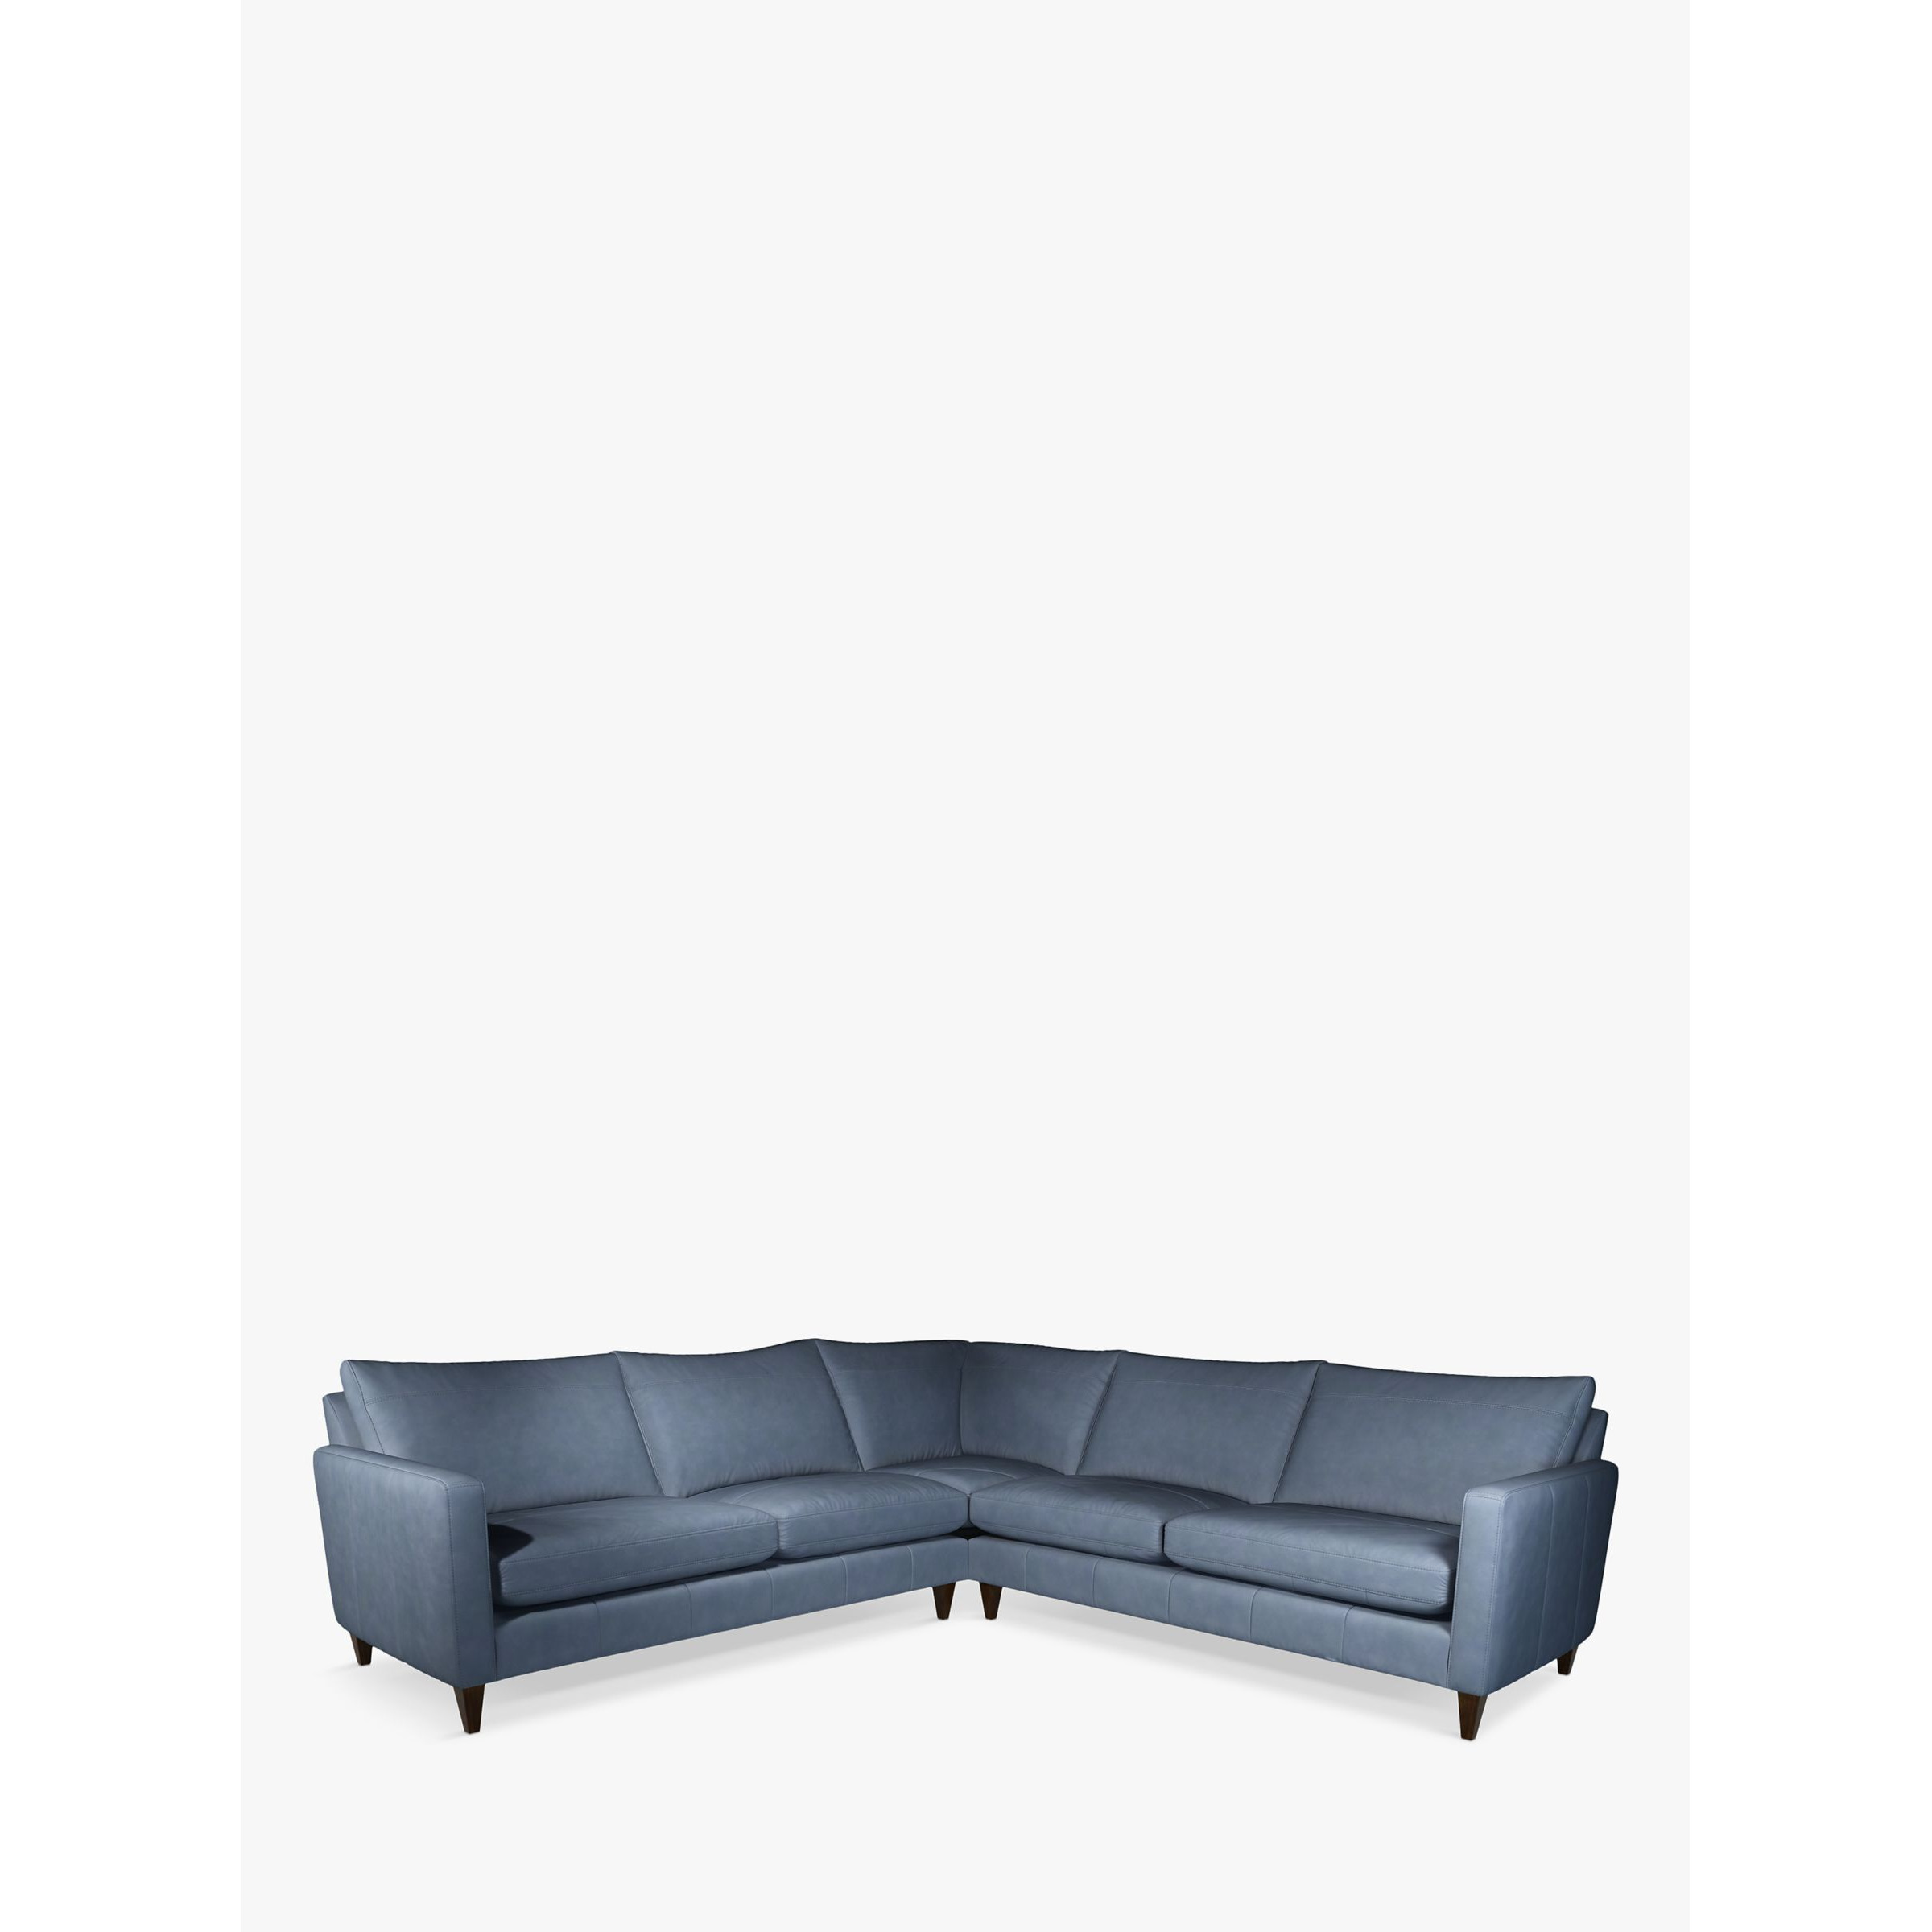 John Lewis Bailey 5+ Seater Leather Corner Sofa, Dark Leg - image 1